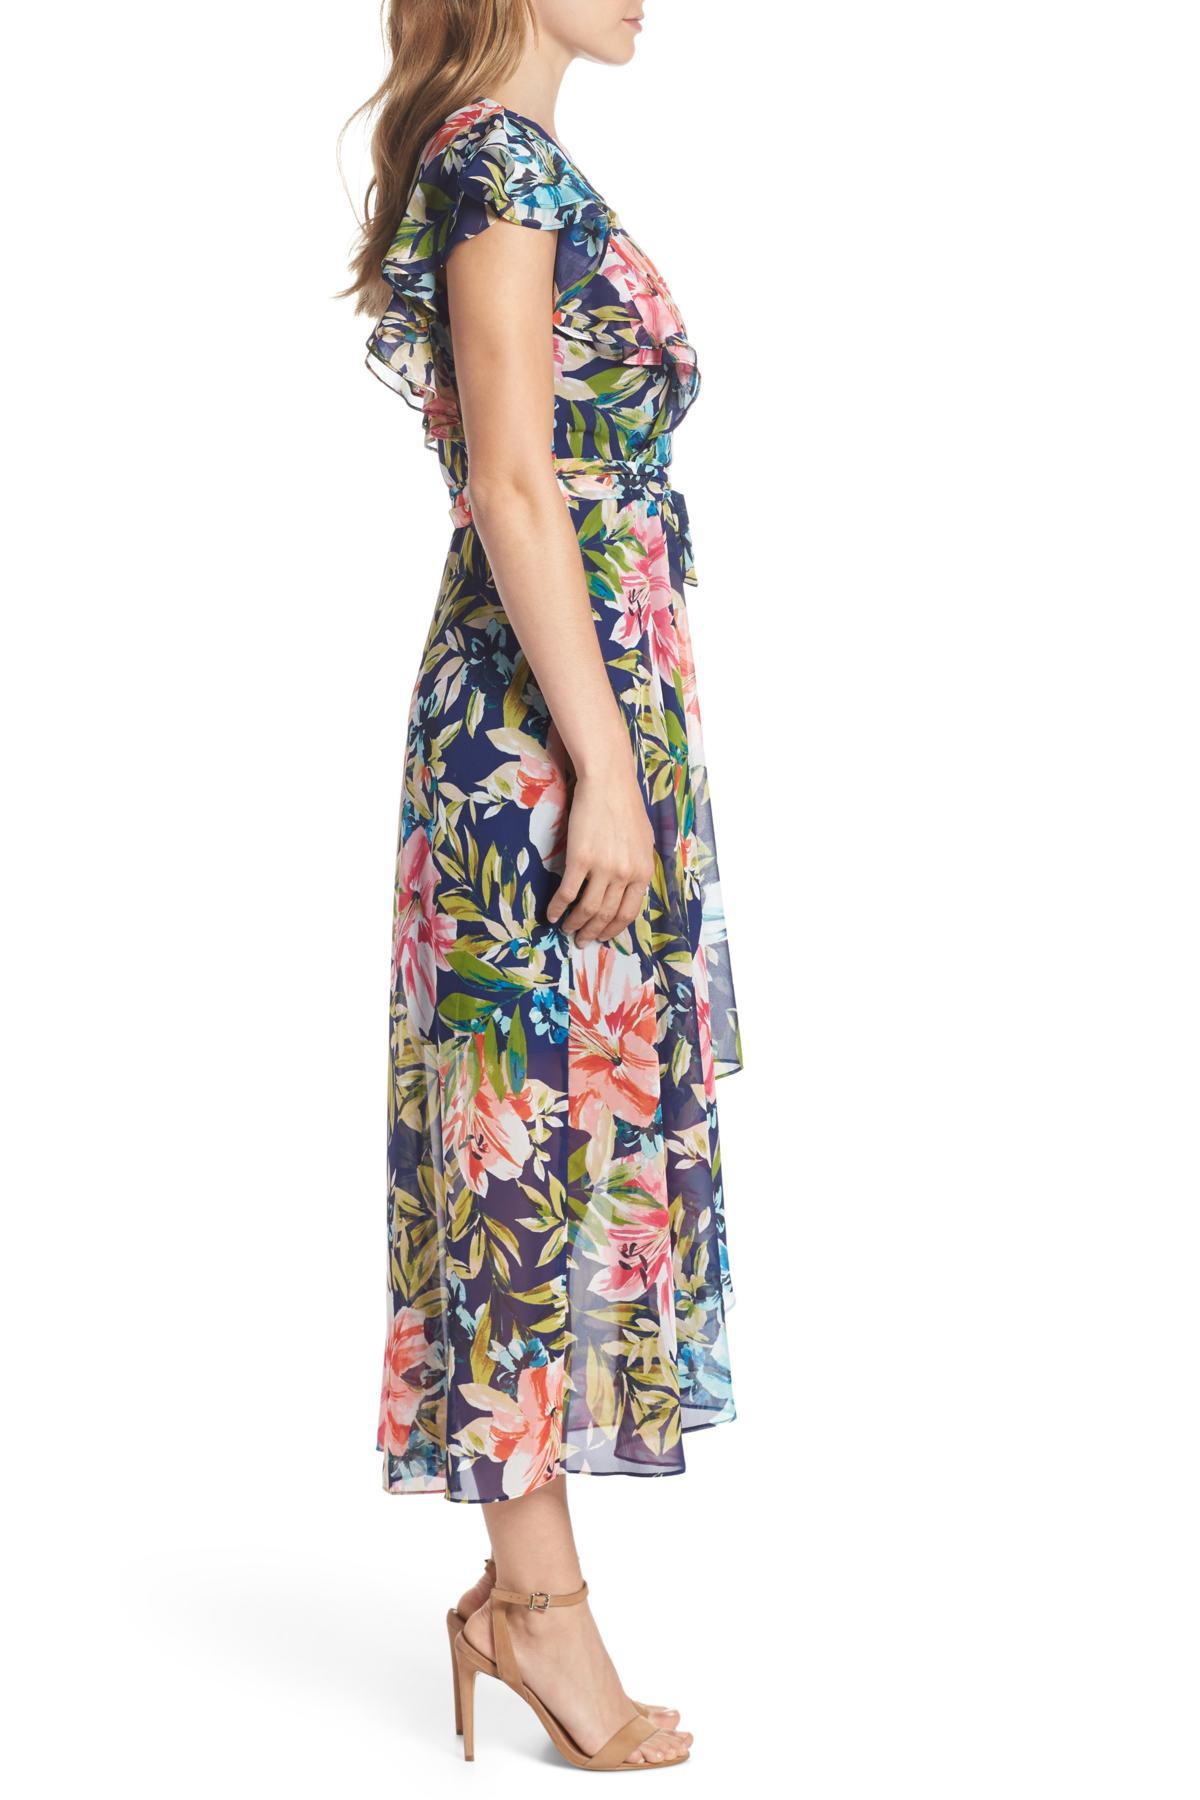 Lyst - Eliza J Ruffle Floral Faux Wrap High/low Midi Dress (regular ...